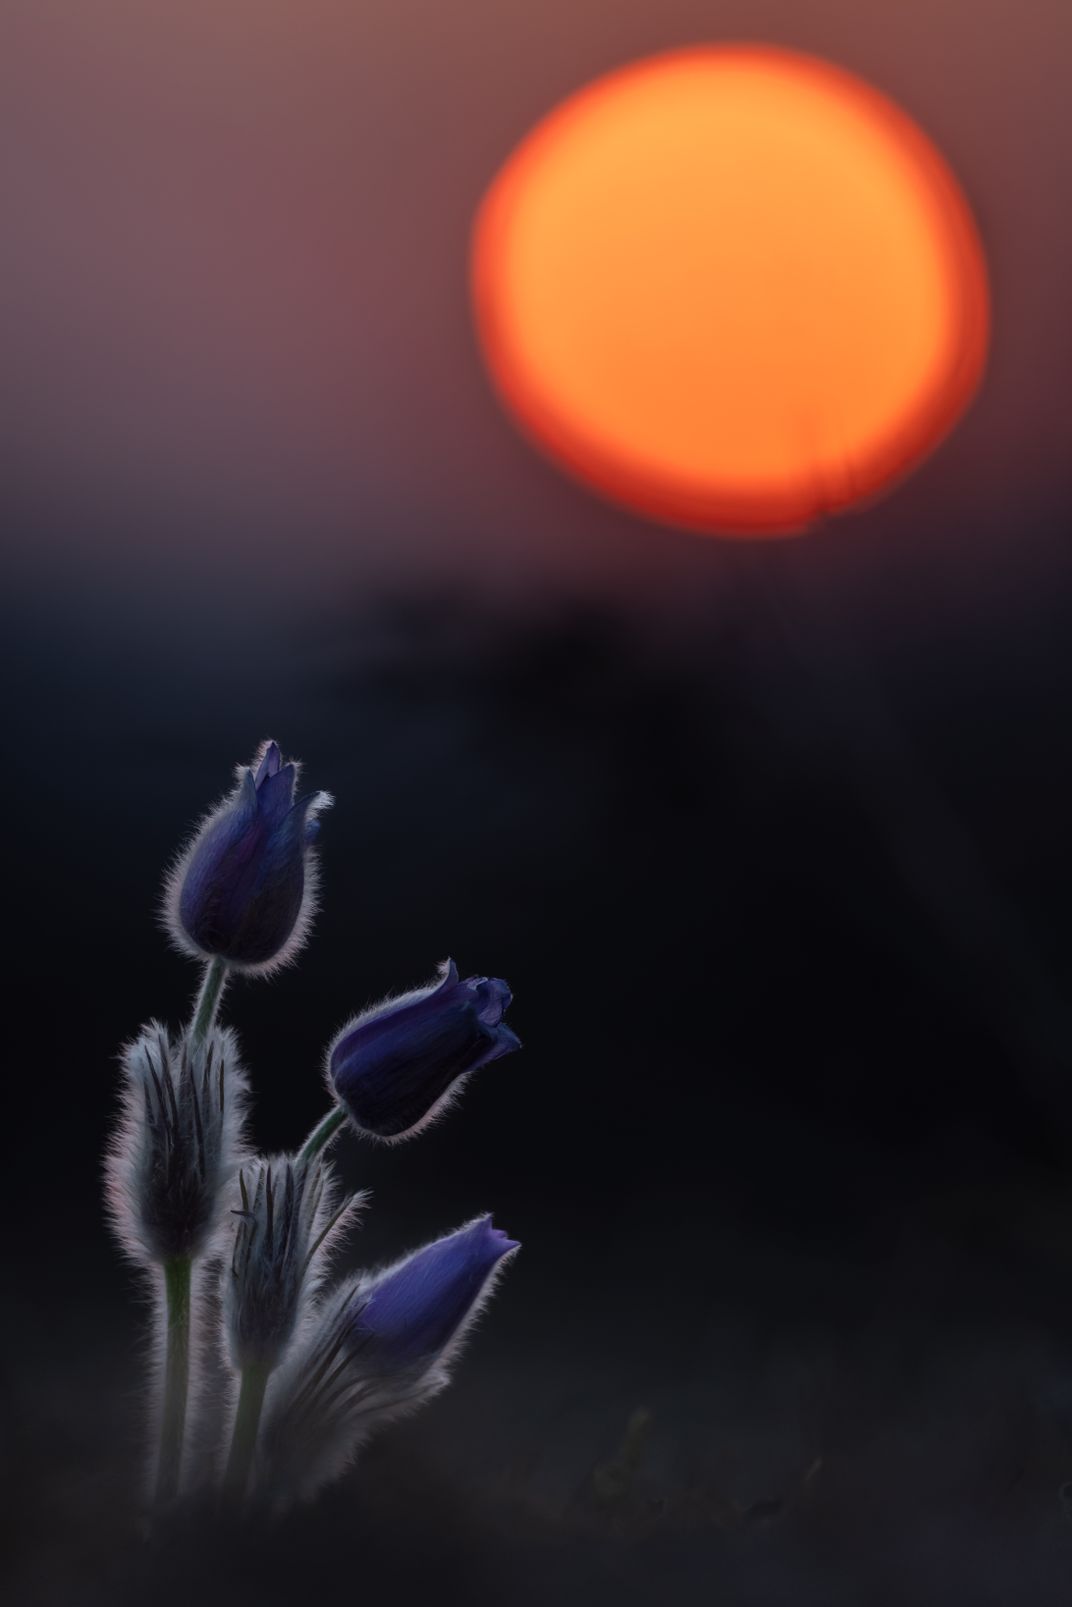 three purple flowers stretch toward a large sun